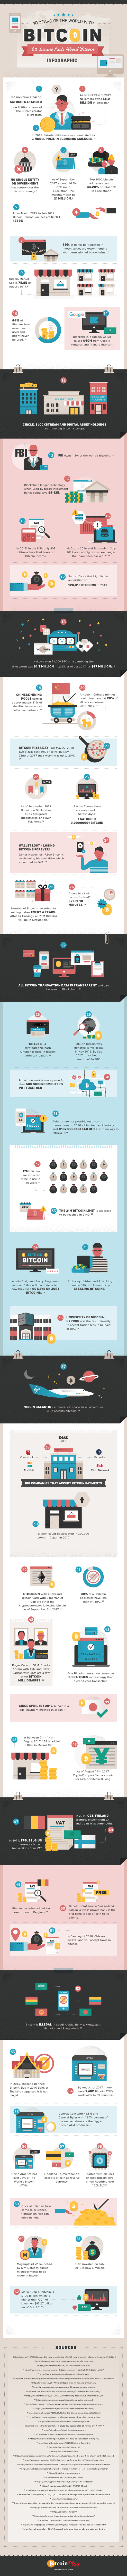 bitcoin-fact -infographic